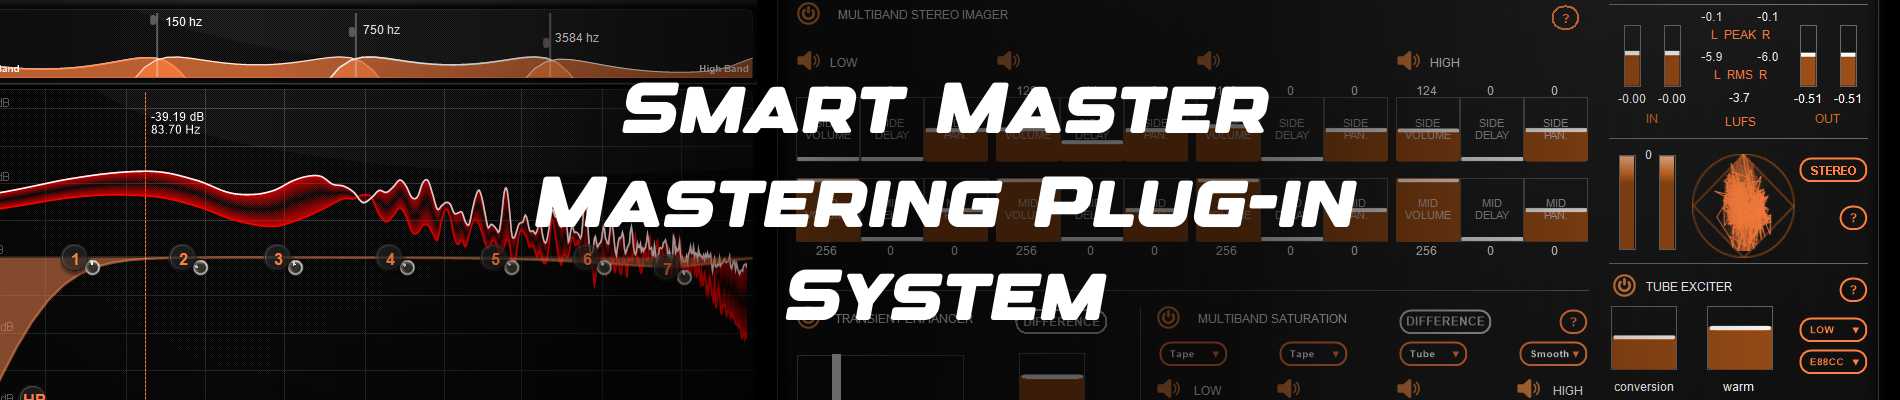 Smart Master Mastering Plug-in